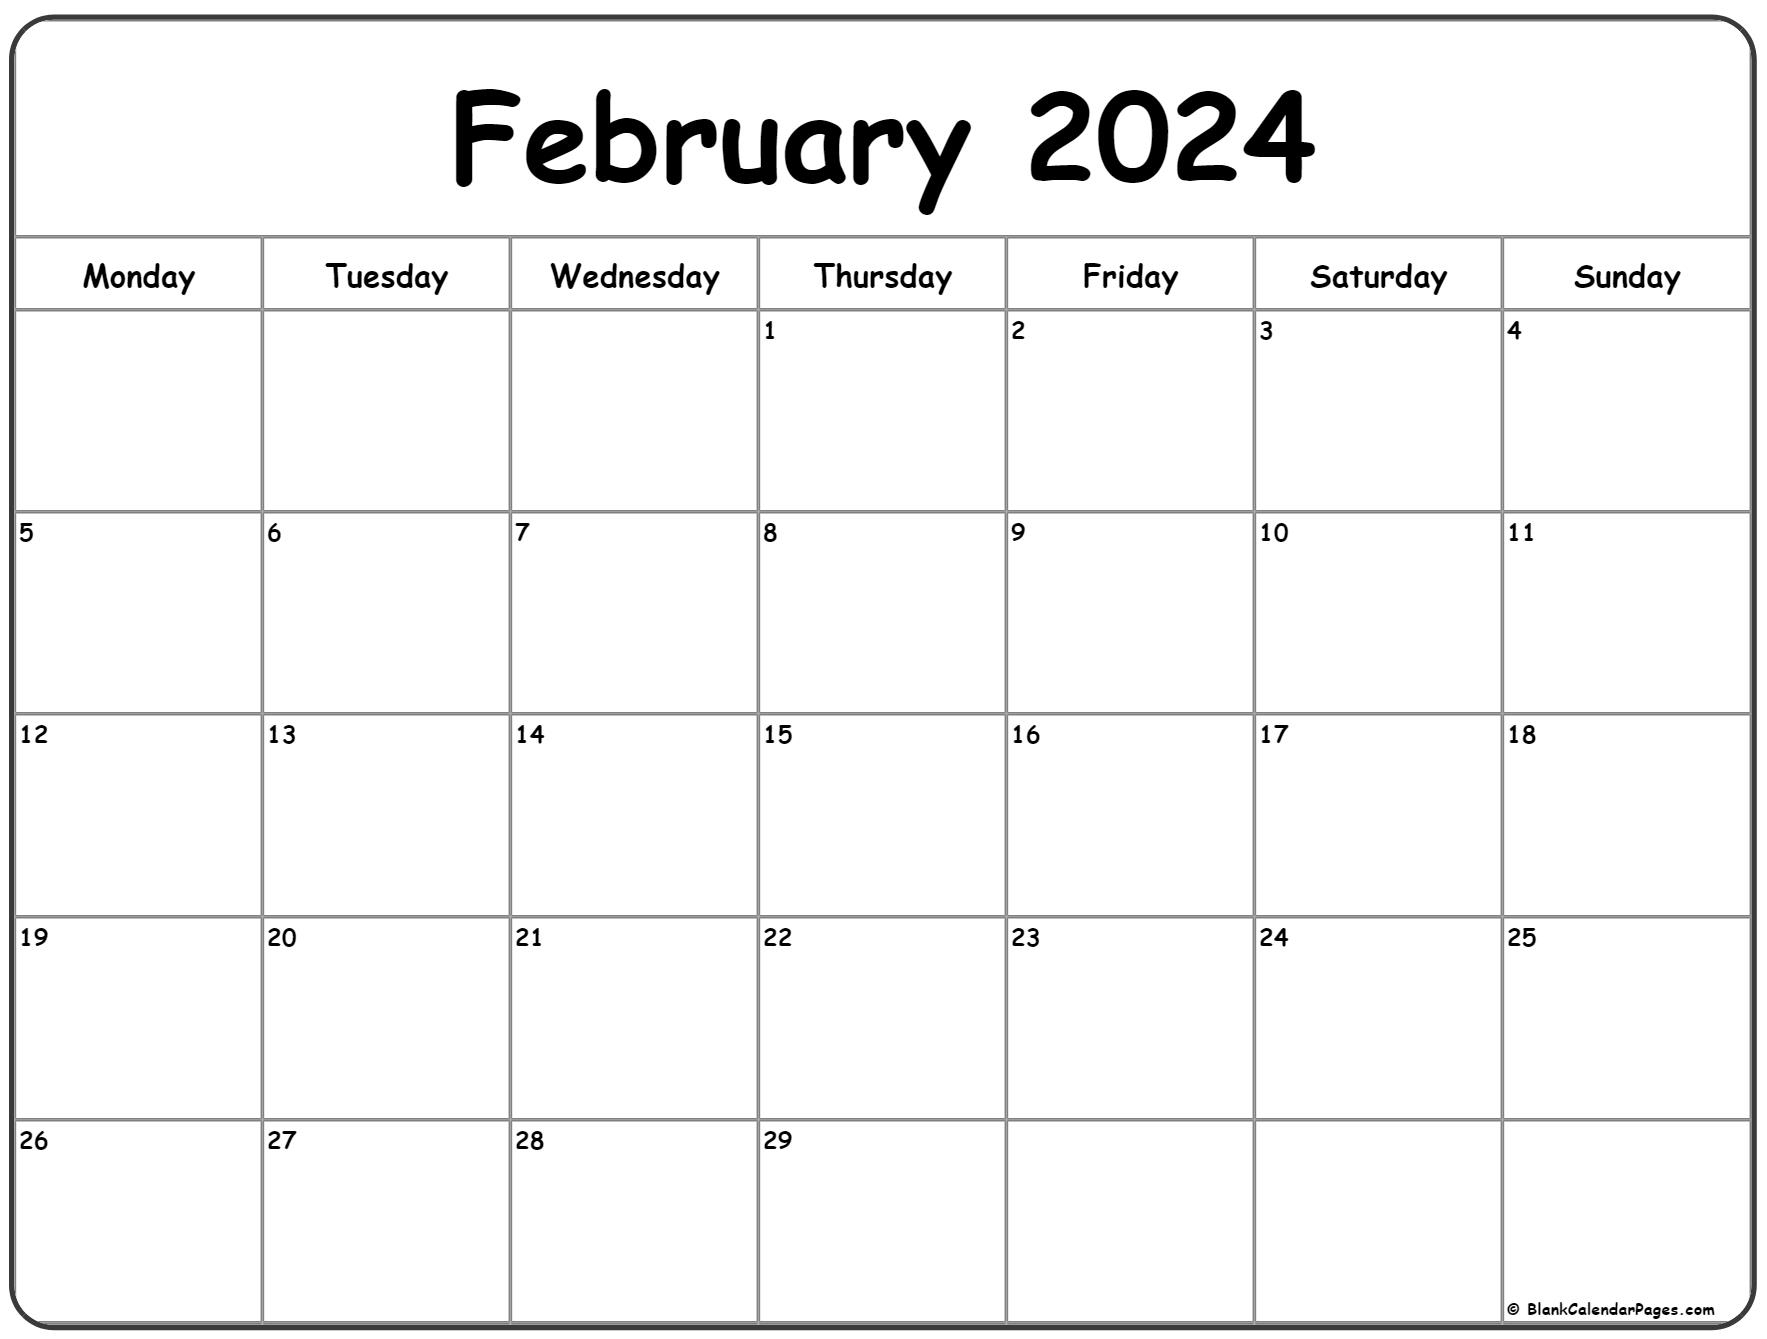 February 2024 Monday Calendar | Monday To Sunday for Printable Blank Calendar February 2024